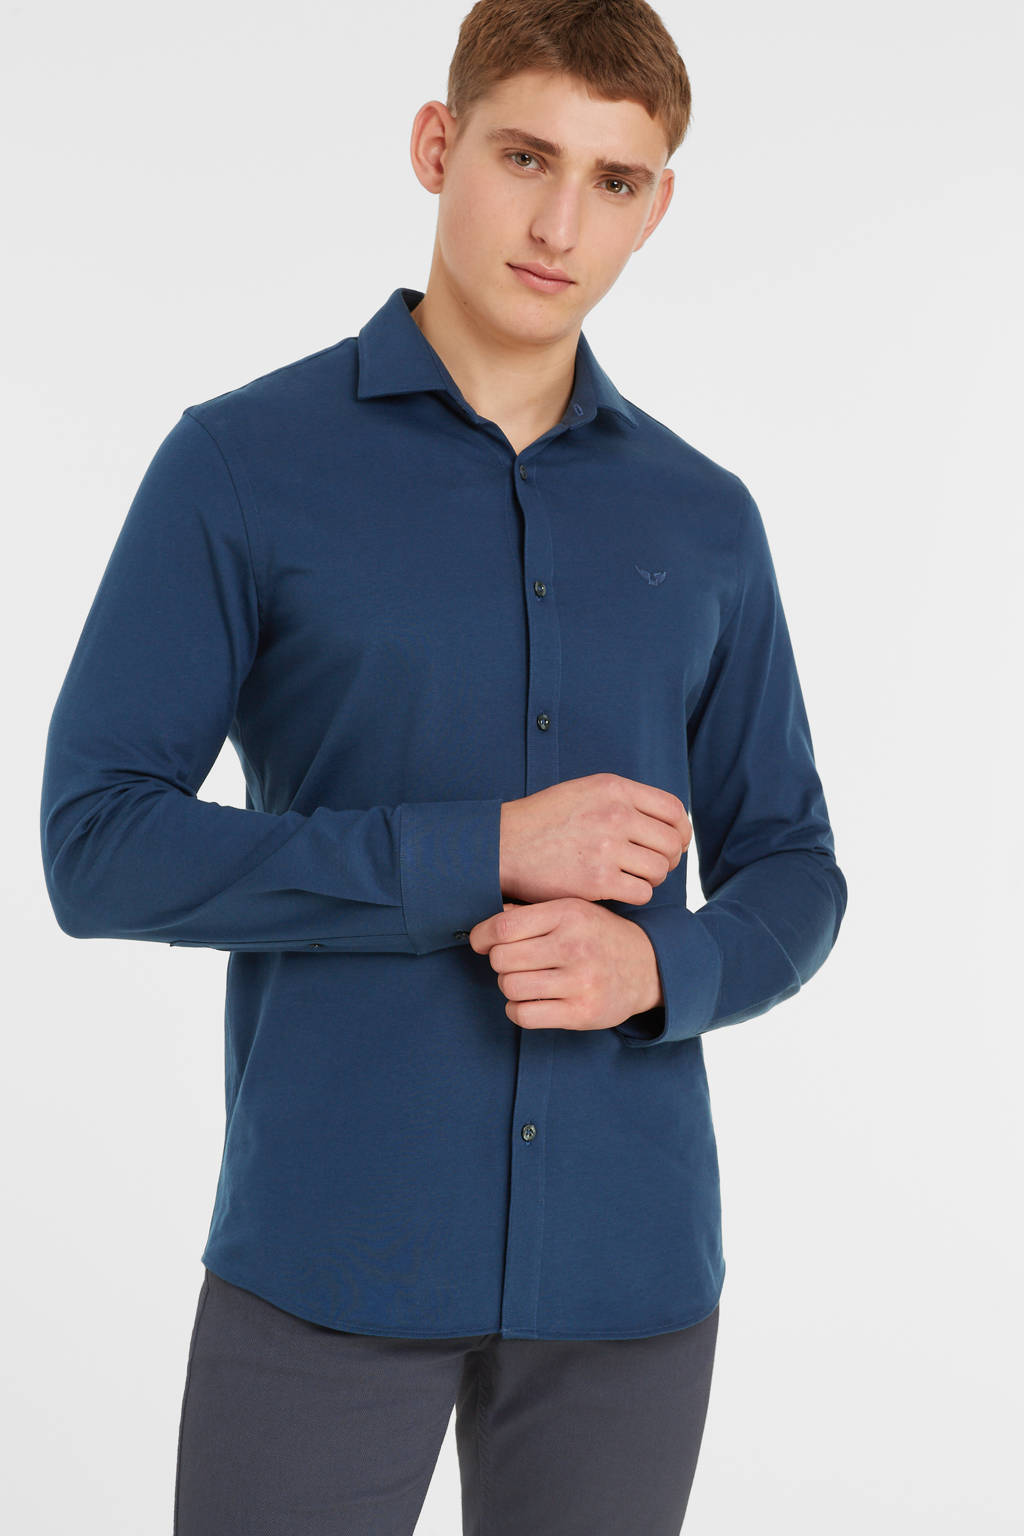 Stevig Klas Koopje PME Legend slim fit overhemd 5286 navy blazer | wehkamp